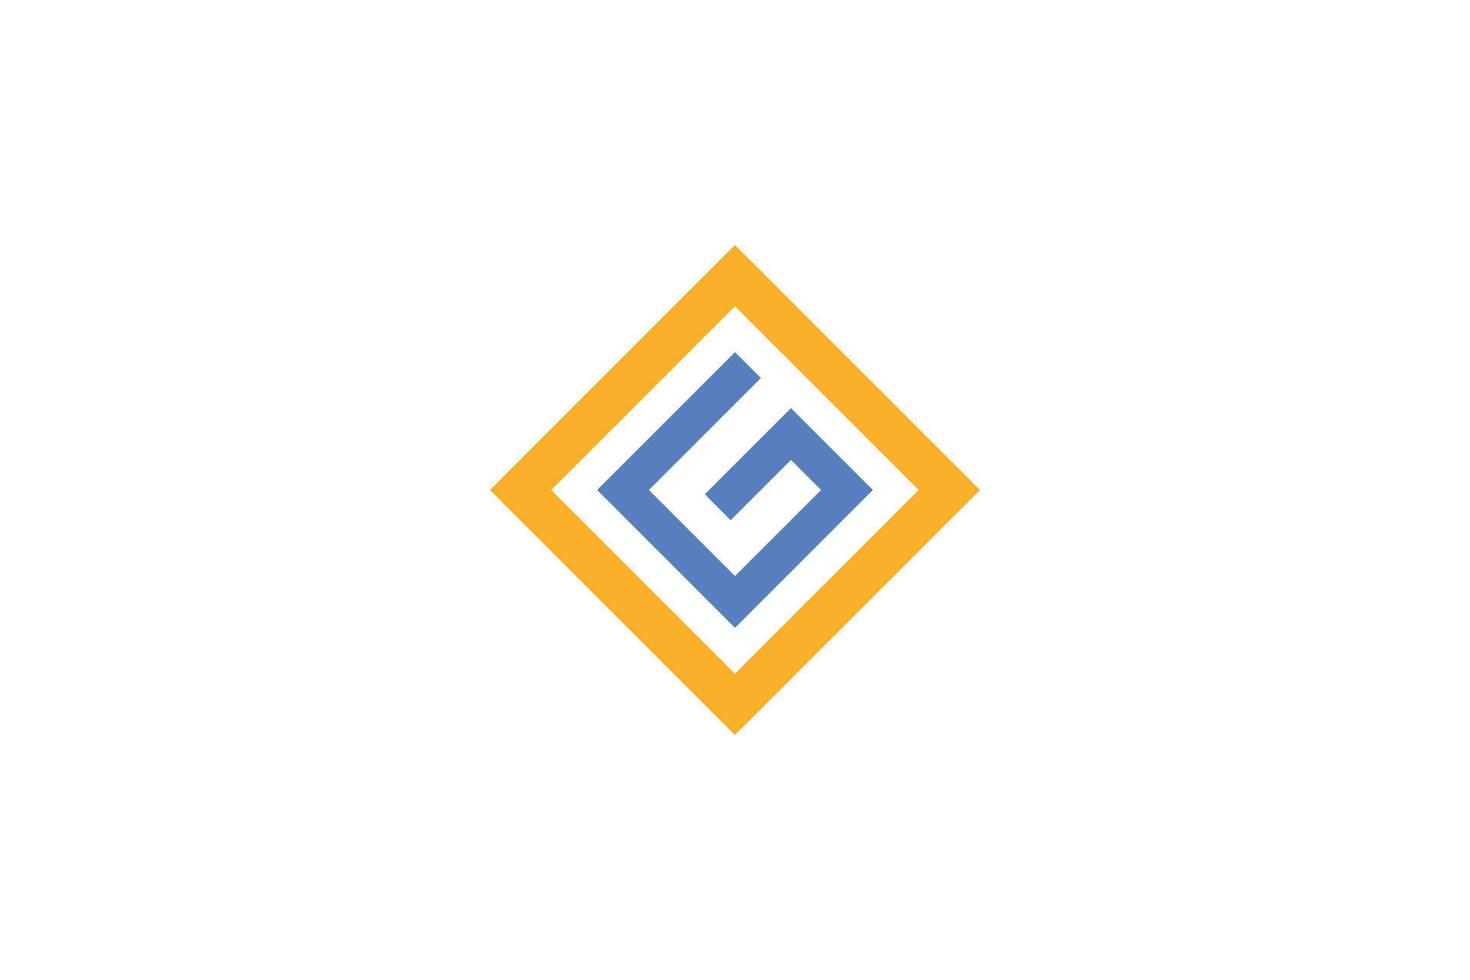 logotipo criativo da letra g vetor